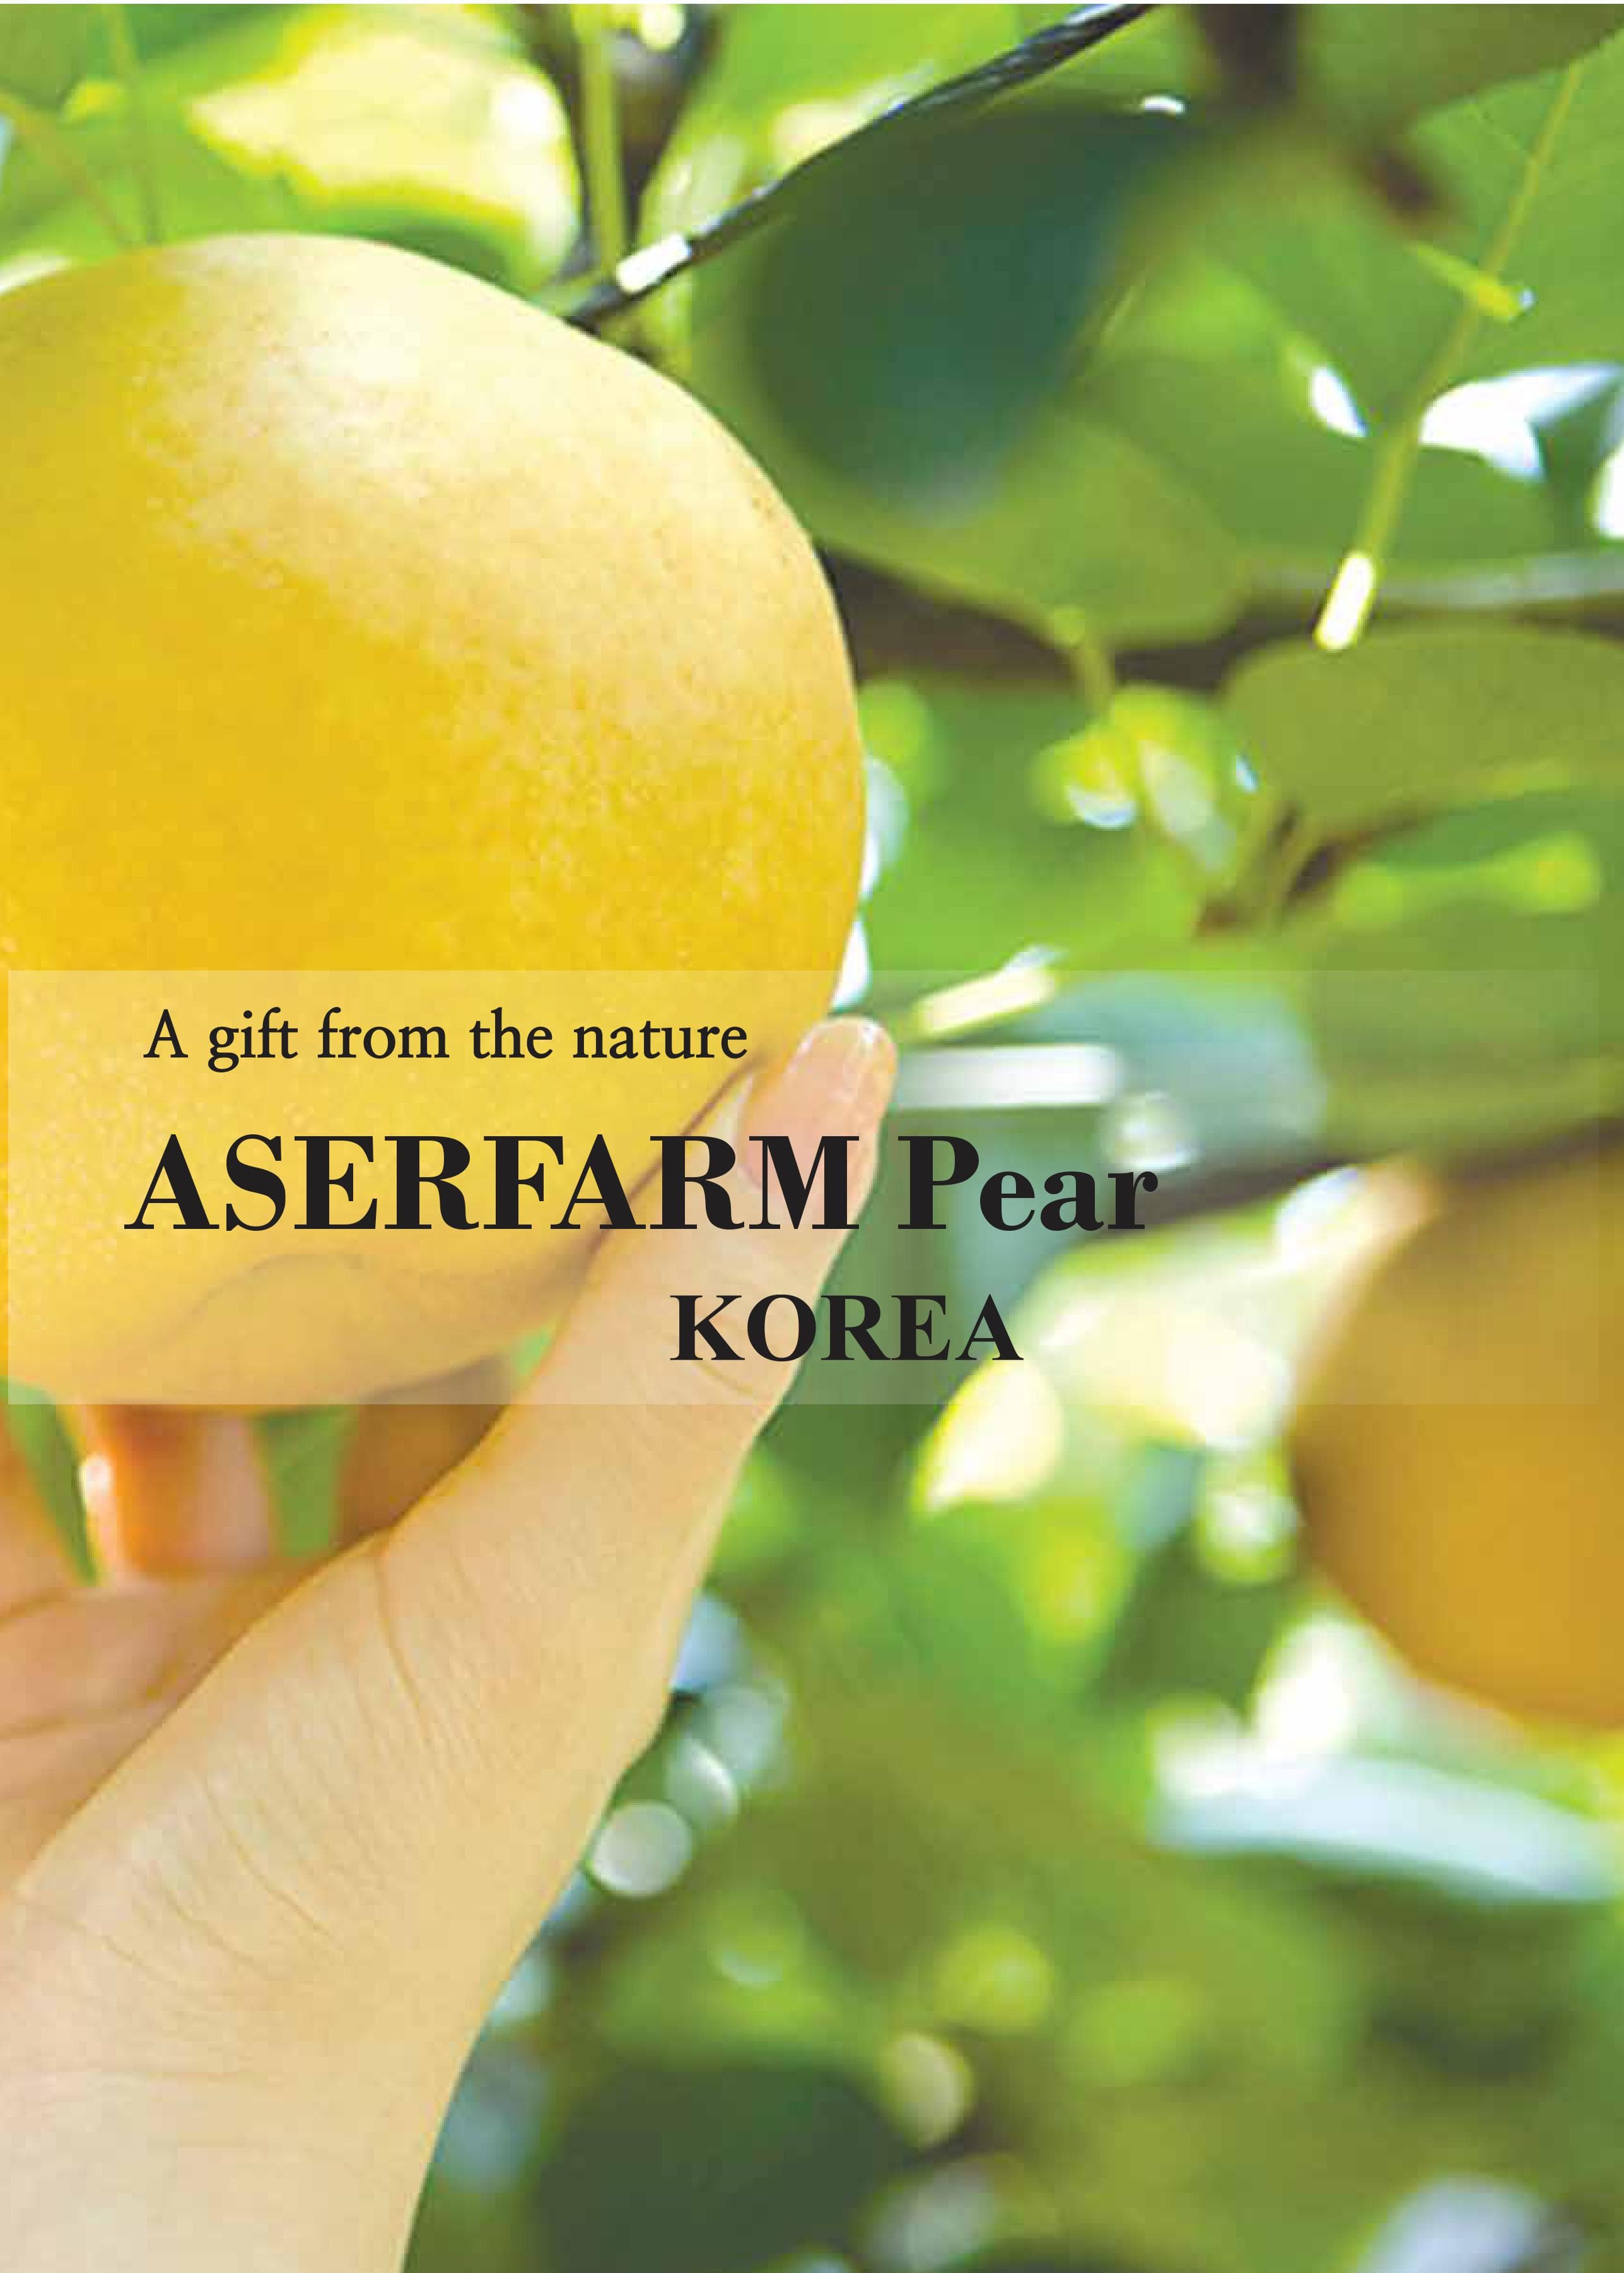 Korea Pear